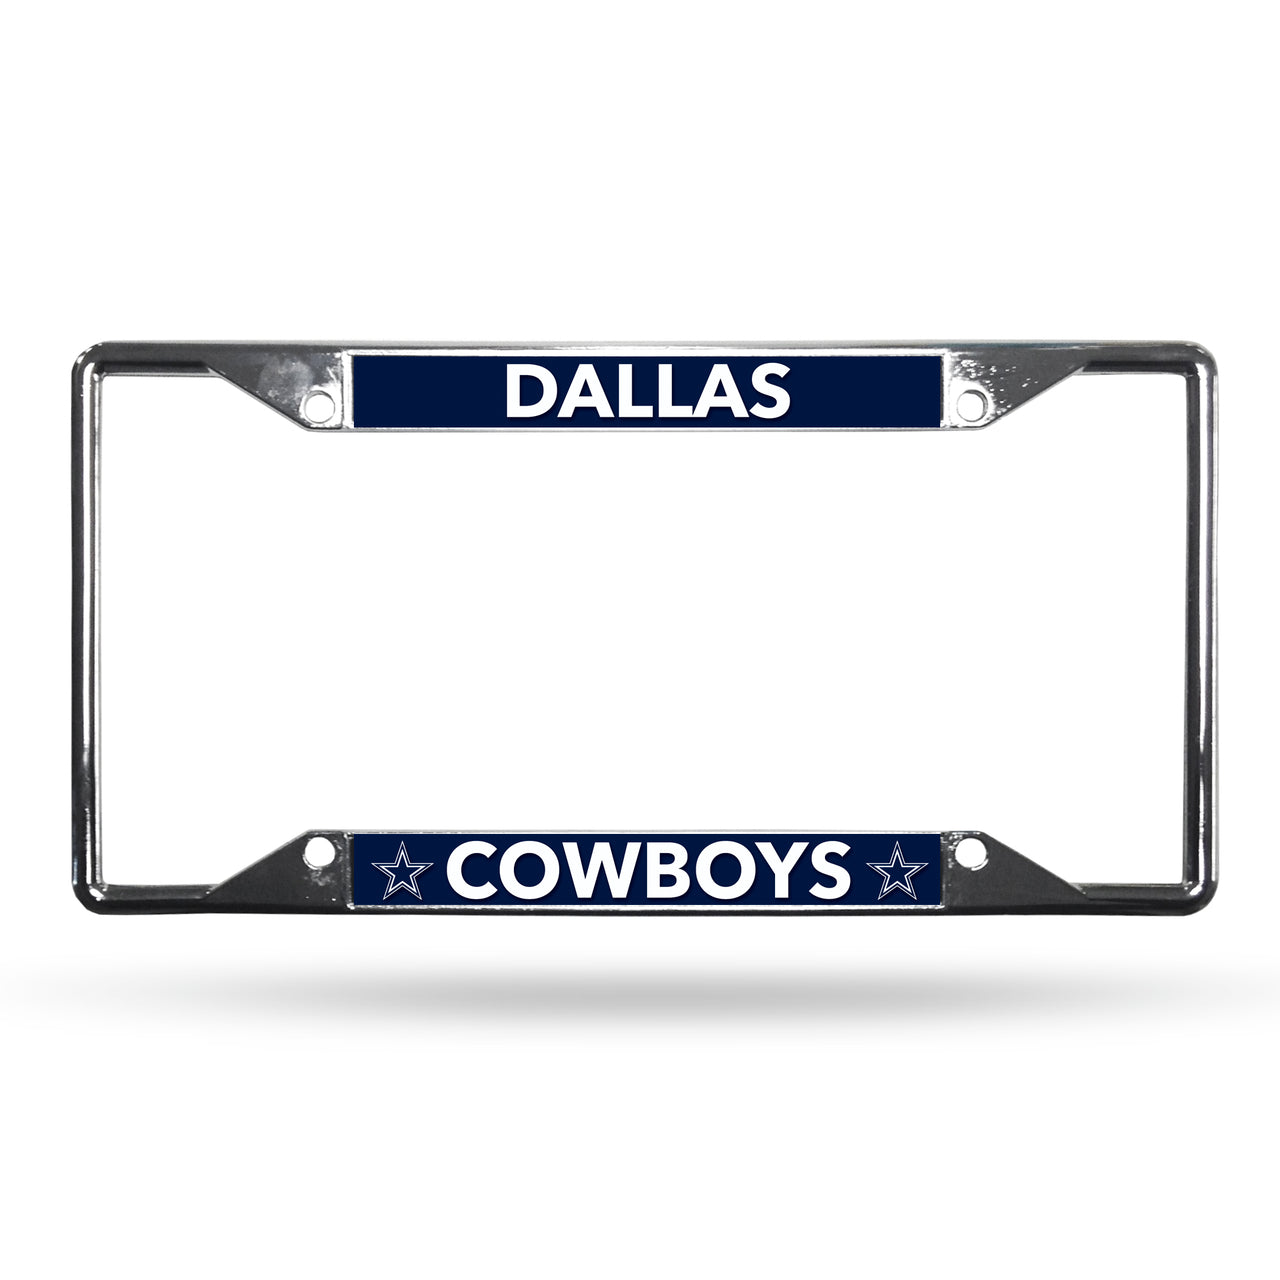 Dallas Cowboys NFL Football EZ-View Chrome License Plate Frame - Dynasty Sports & Framing 